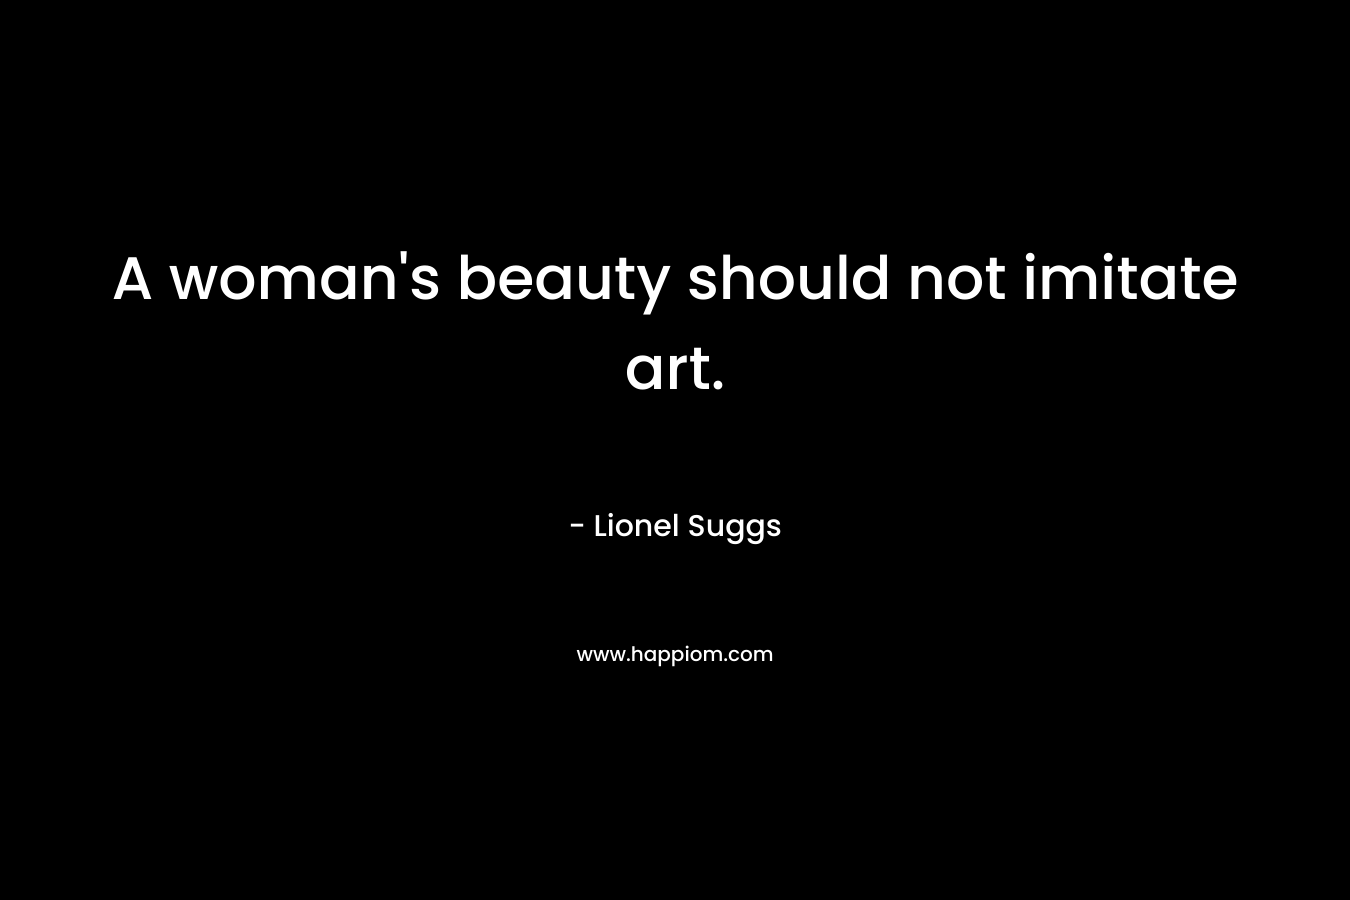 A woman's beauty should not imitate art.